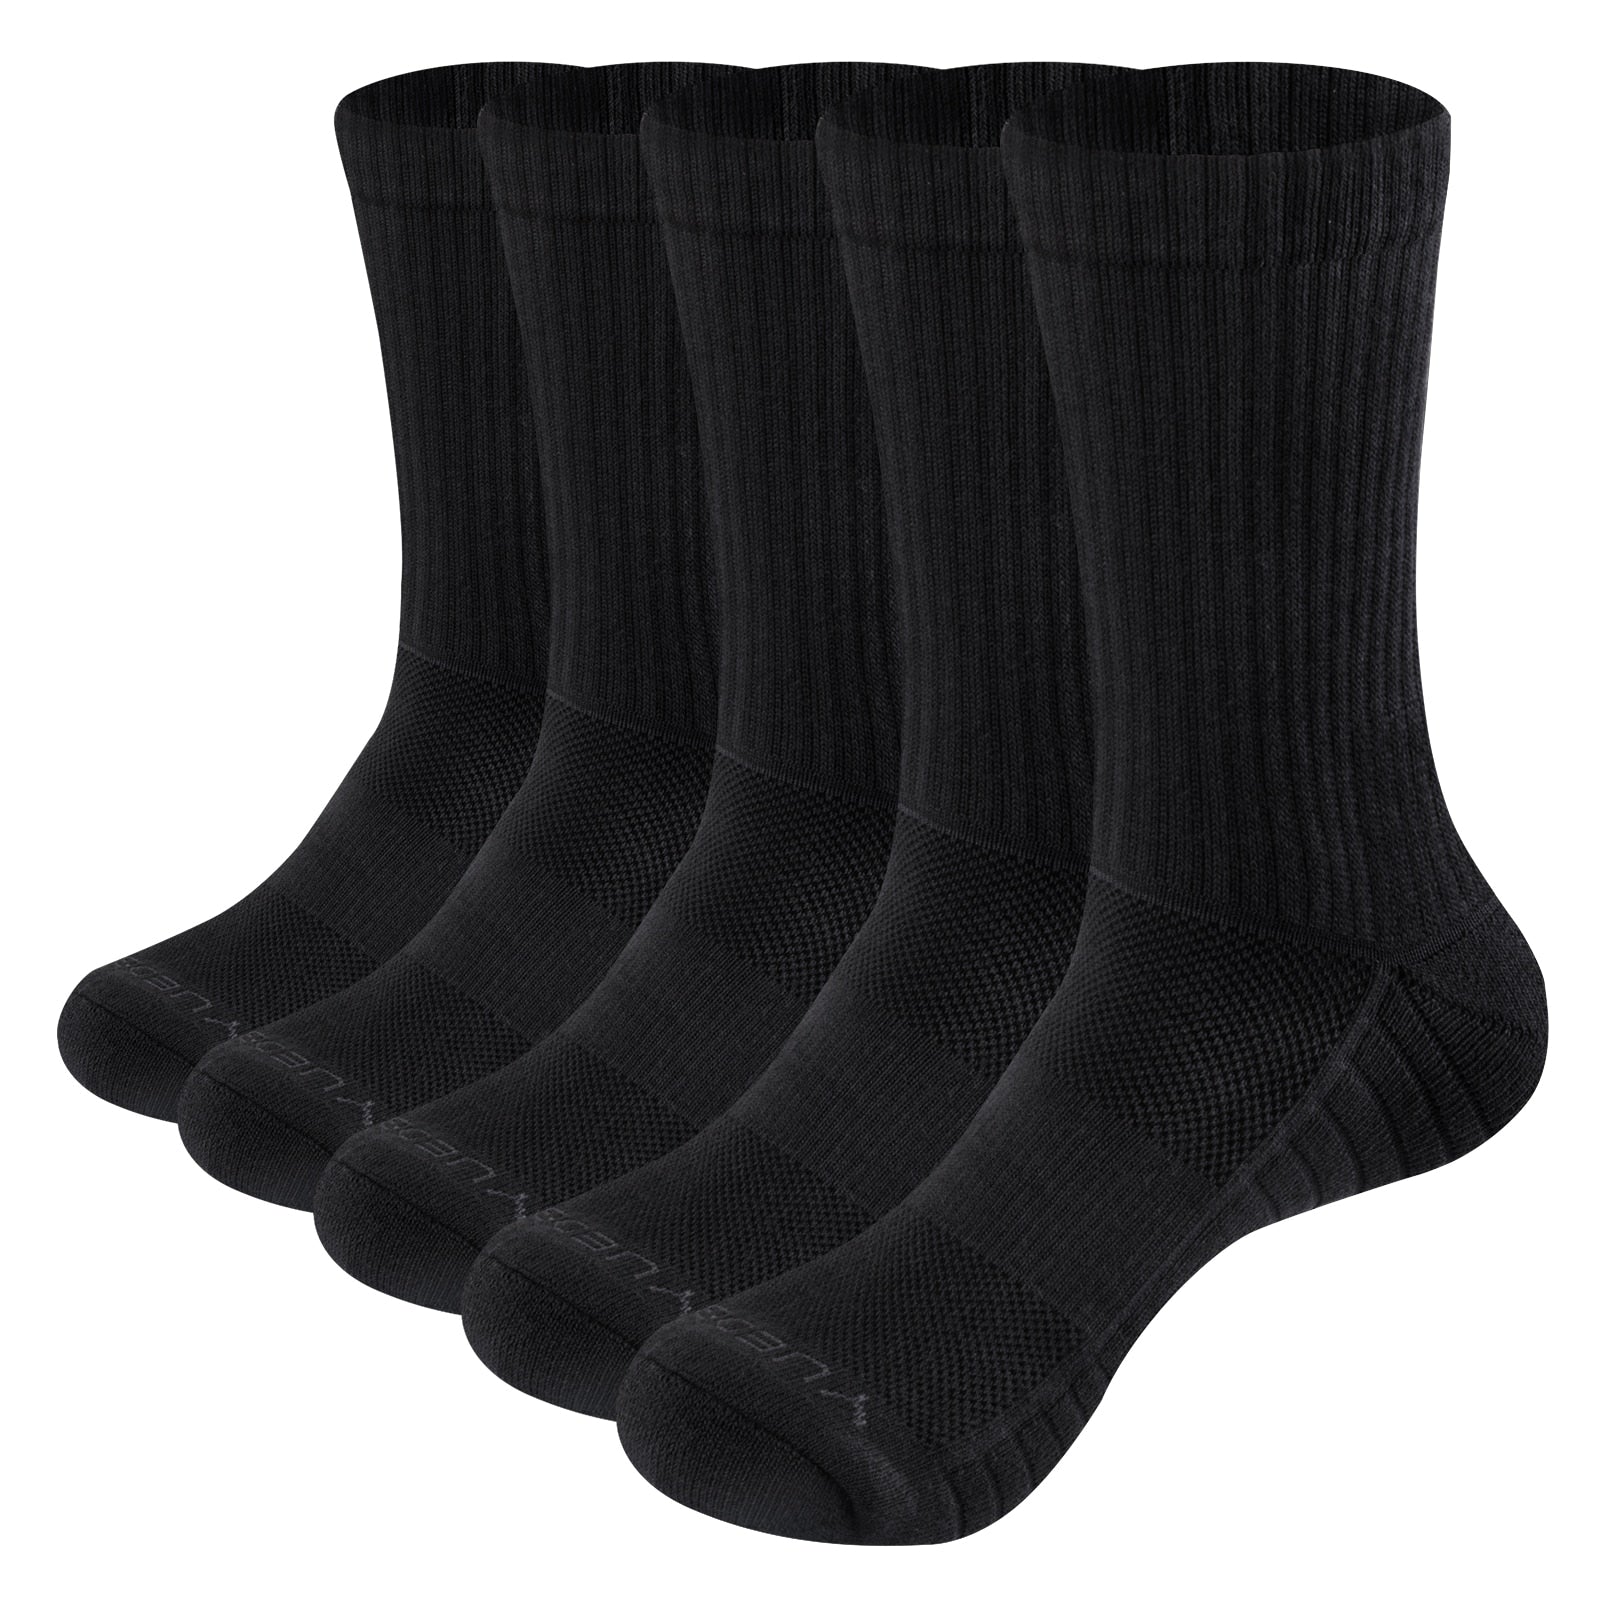 Buy black 5 pairs Thick Breathable Cotton Cushion  Hiking &amp; Trekking Socks 37-46 EU